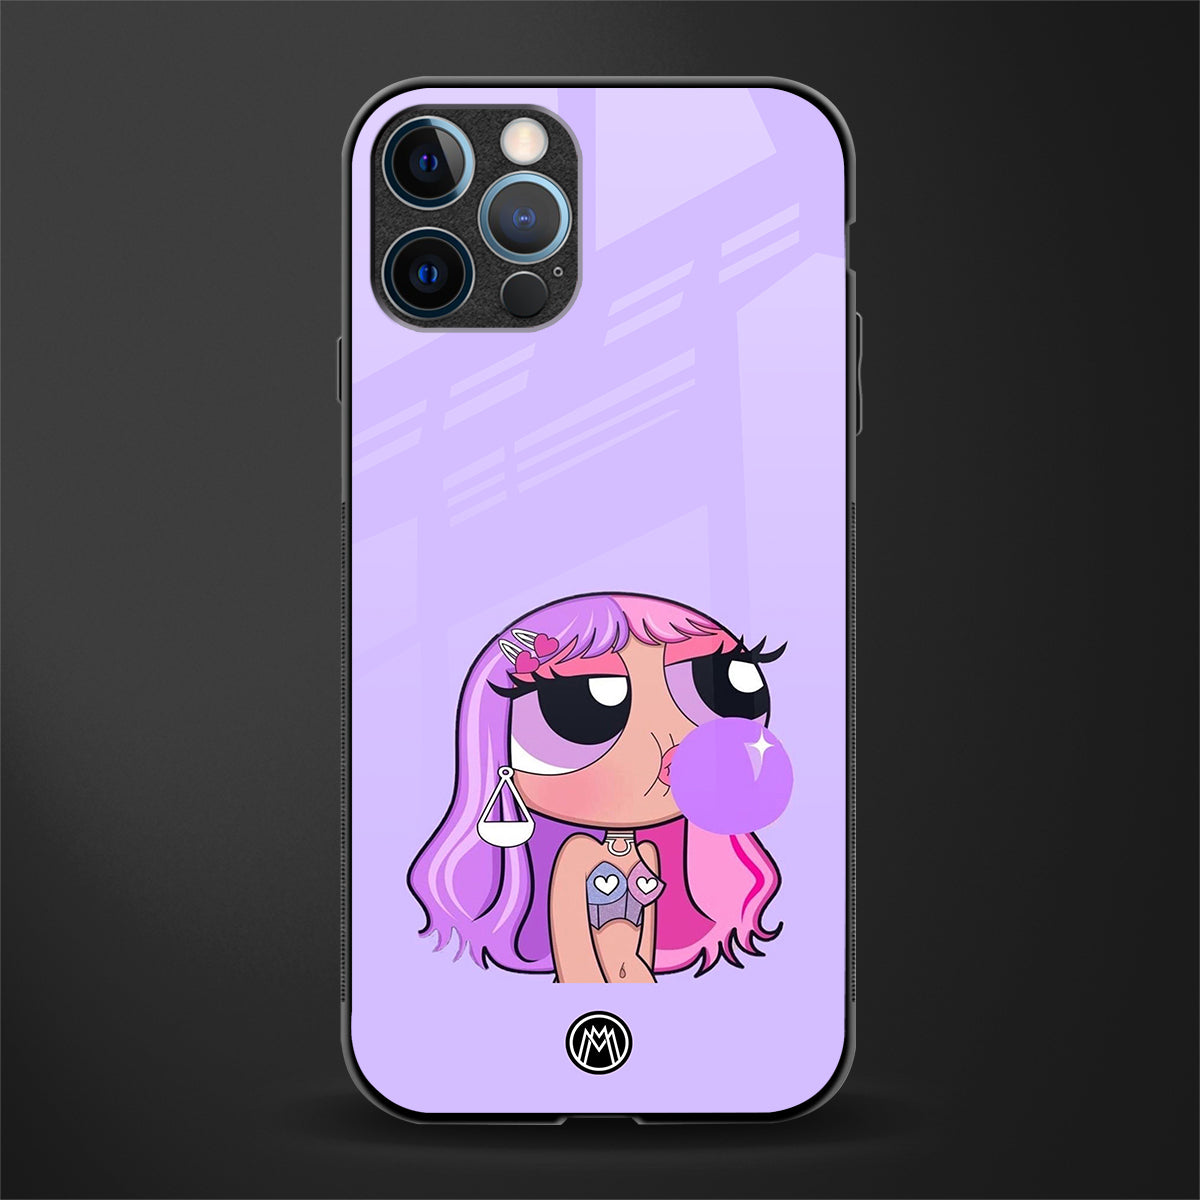 purple chic powerpuff girls glass case for iphone 12 pro max image